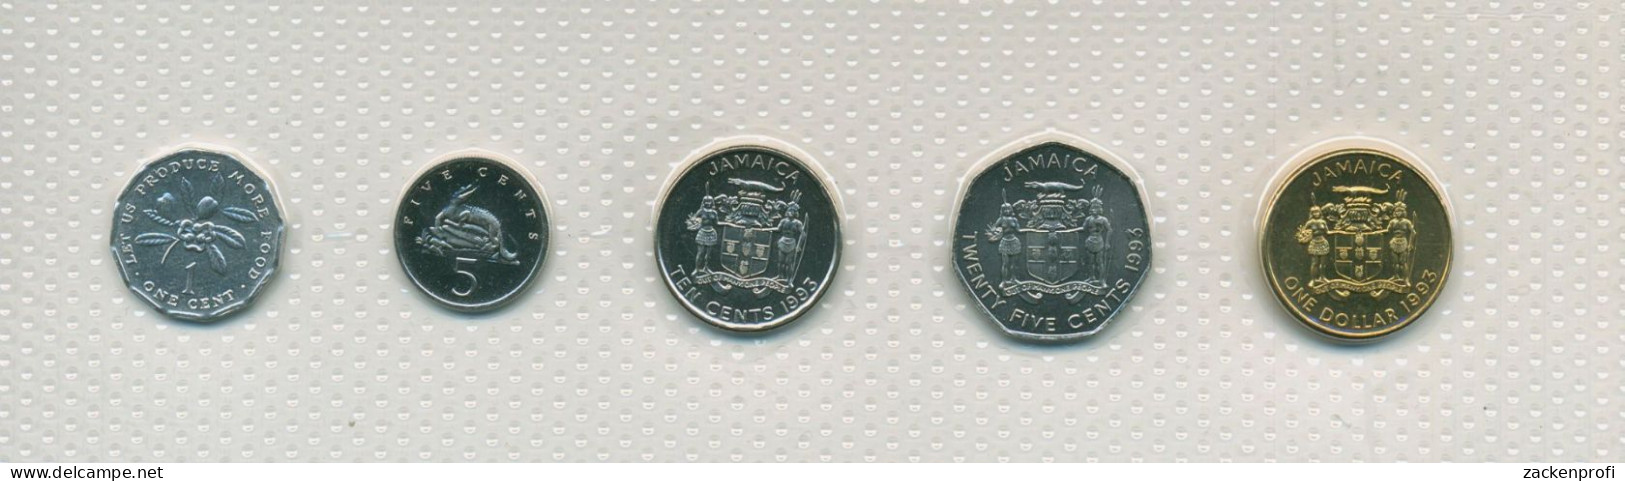 Jamaika 1991/1993 Kursmünzen 1 Cent - 1 Dollar Im Blister, St, (m5463) - Jamaica